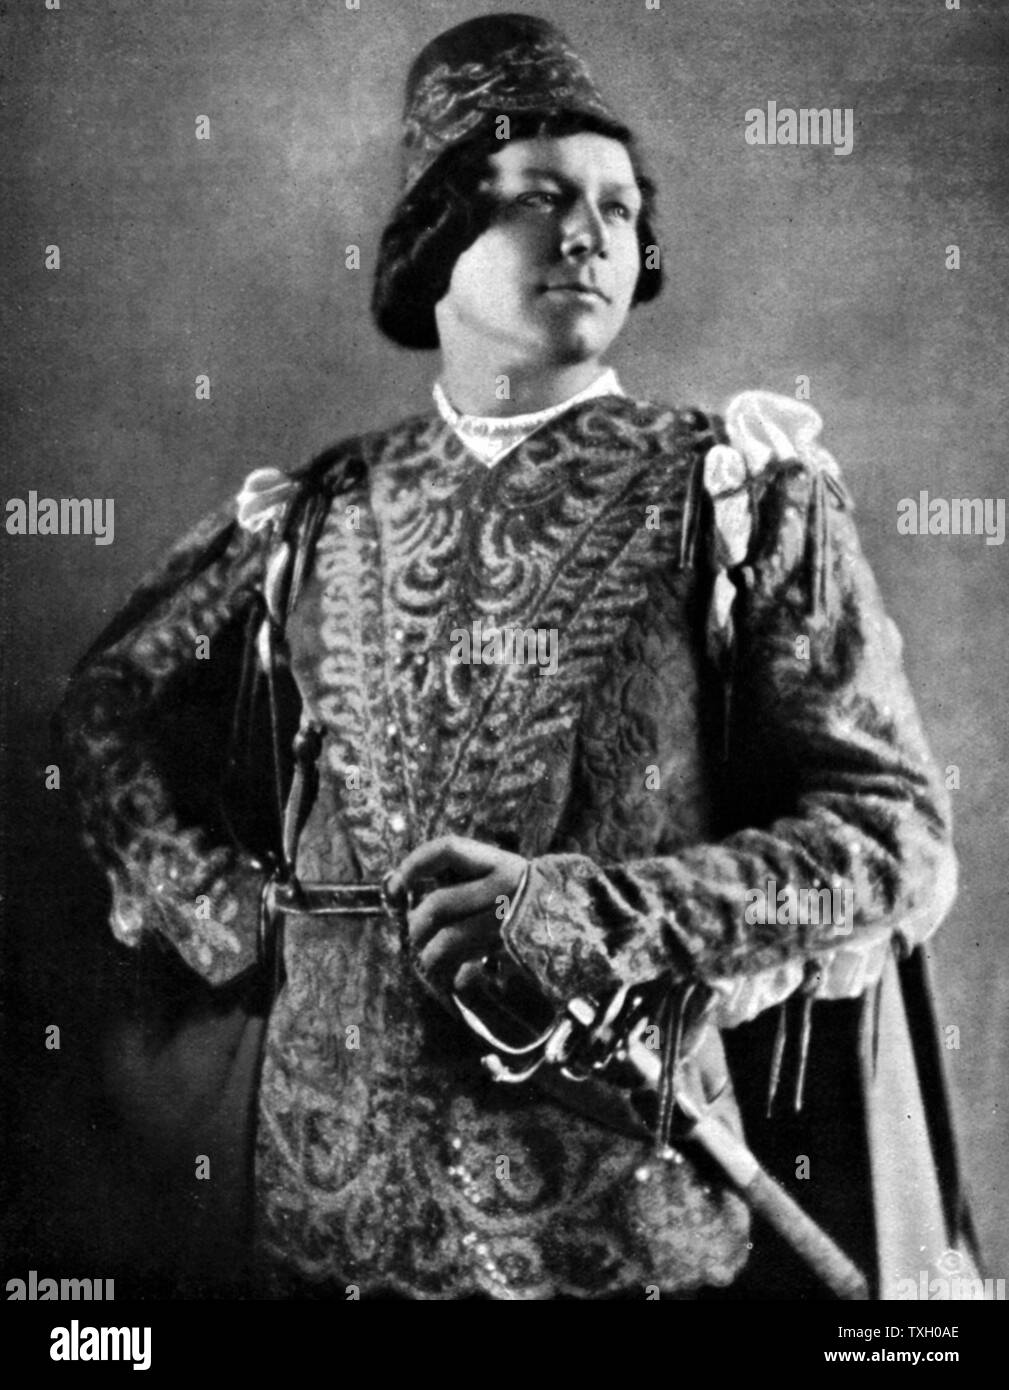 Fernand Ansseau (1890-1972) Belgian operatic tenor, active 1913-39. Ansseau as Romeo in Gounod's opera 'Romeo et Juliette' based on Shakespeare Stock Photo